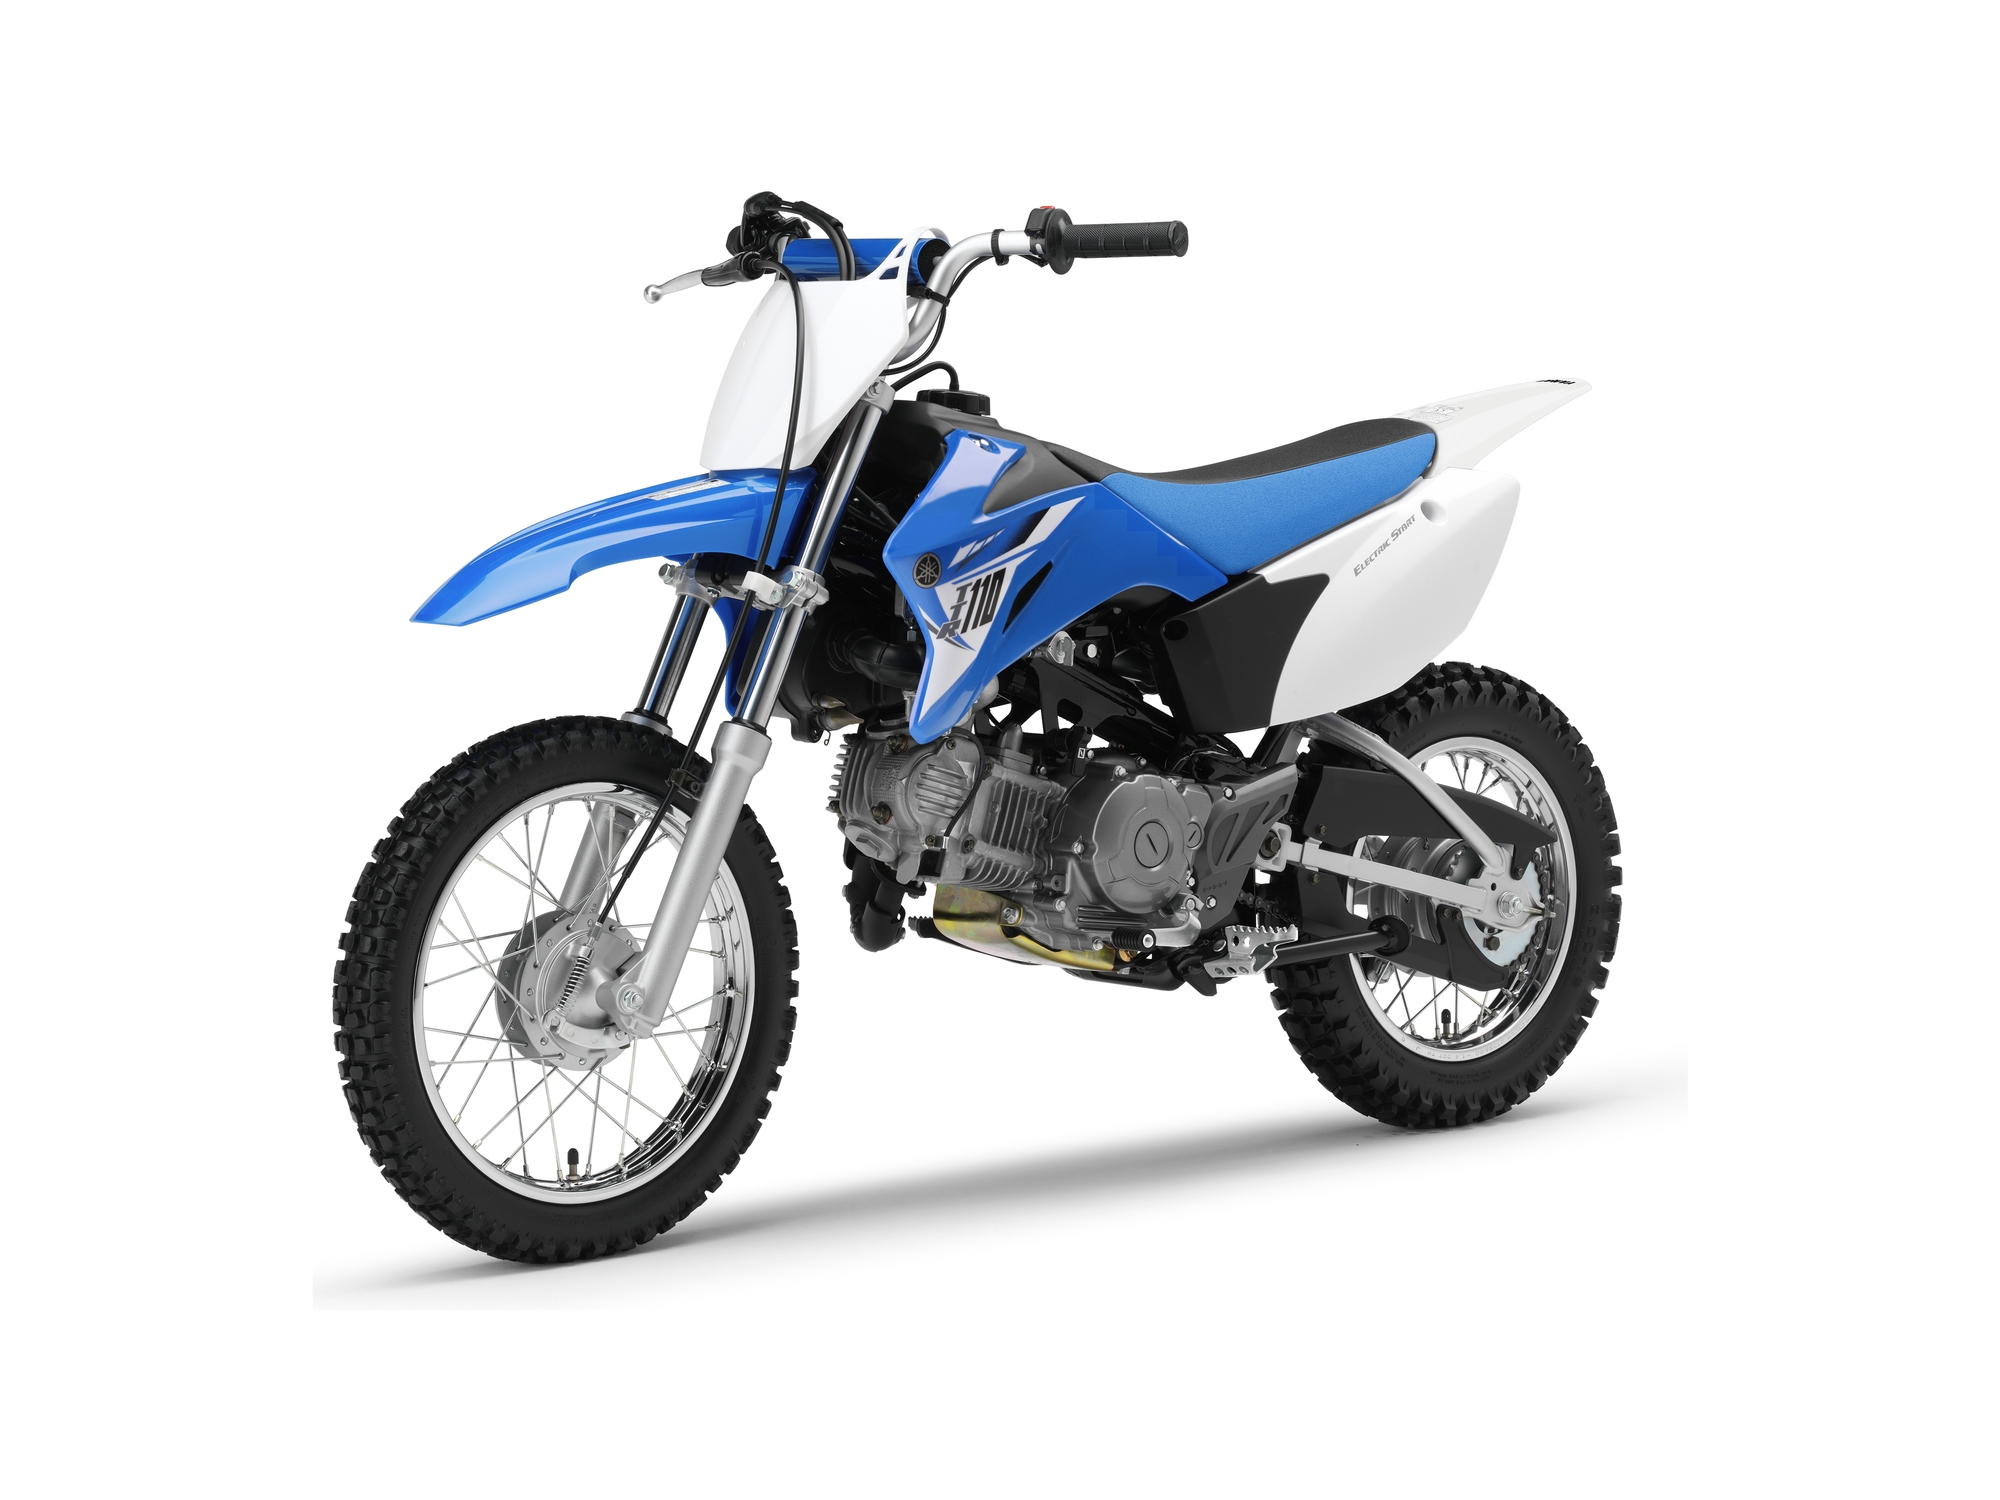 TT-R110E - Motocikli - Yamaha Motor